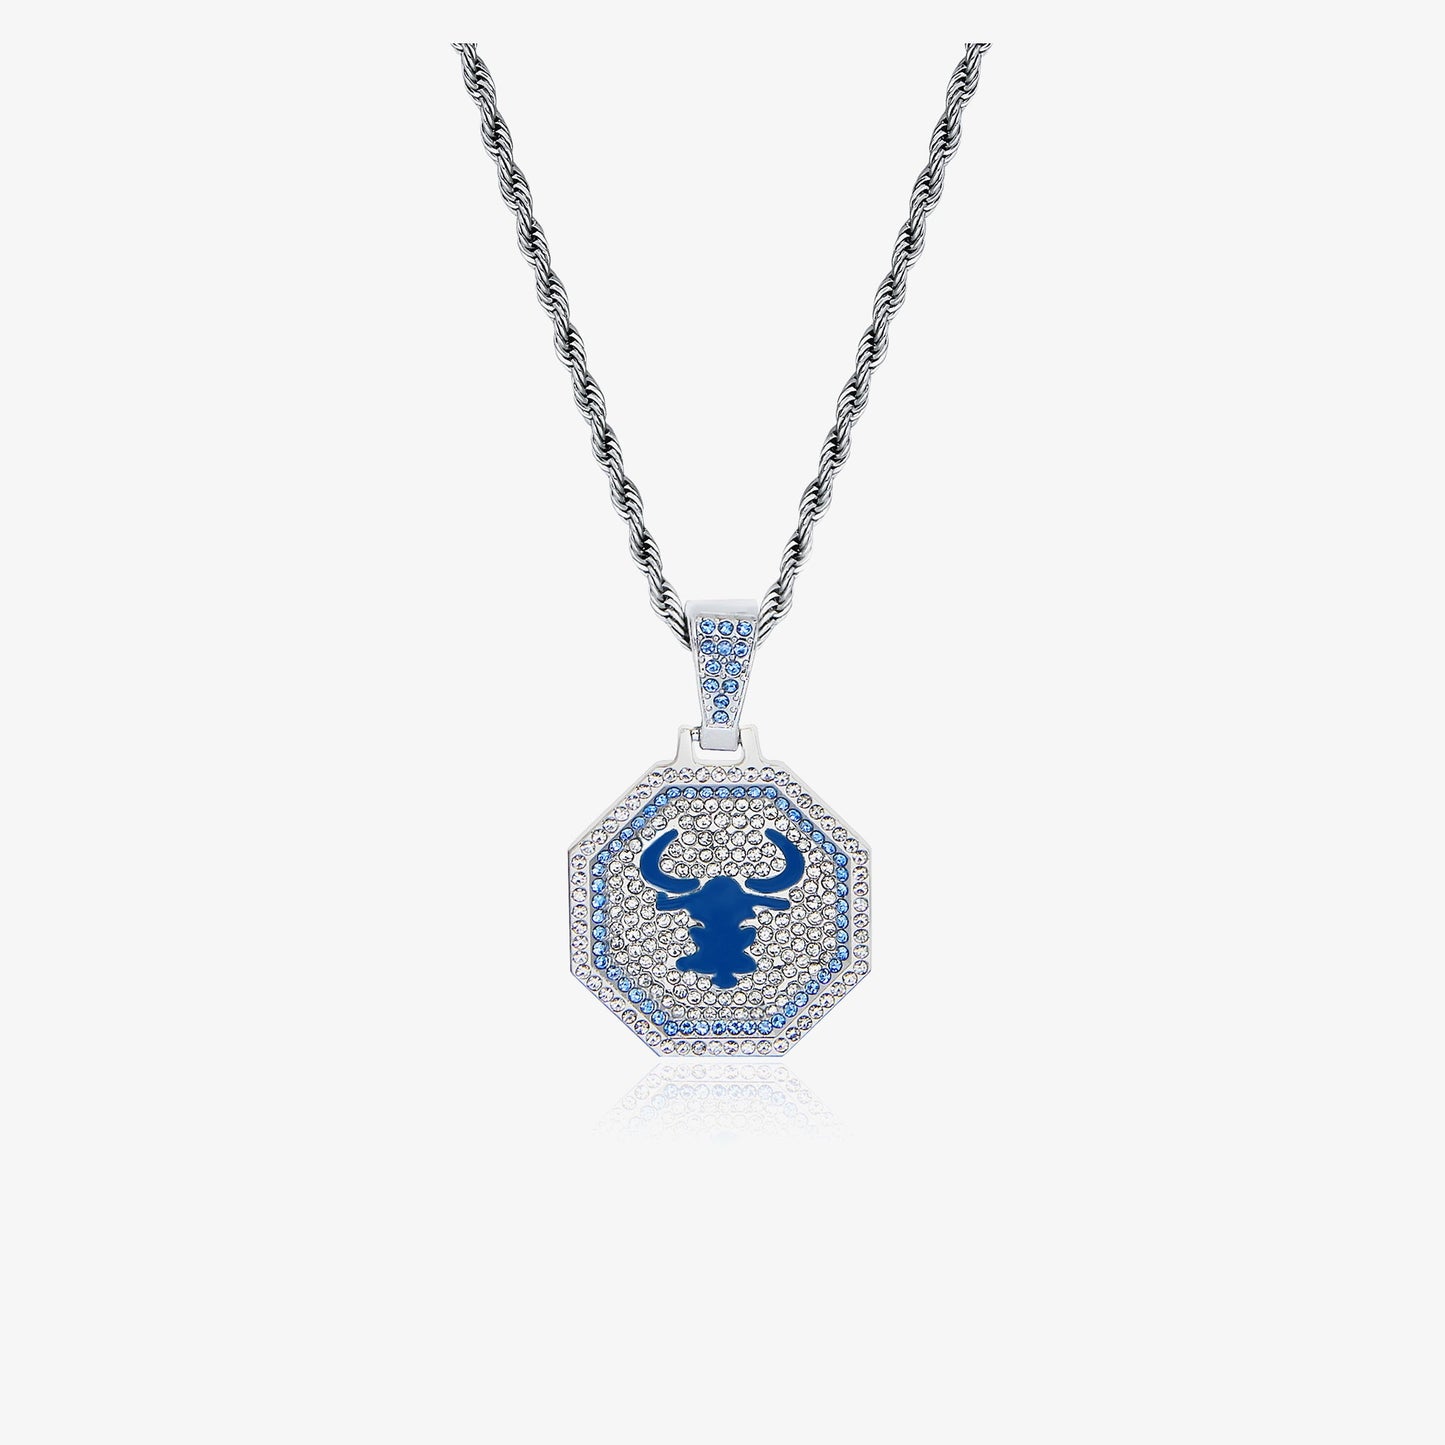 Twelve Zodiac Zodiac Men Fashionable Necklaces - NextthinkShop0CJLX174931109IR0